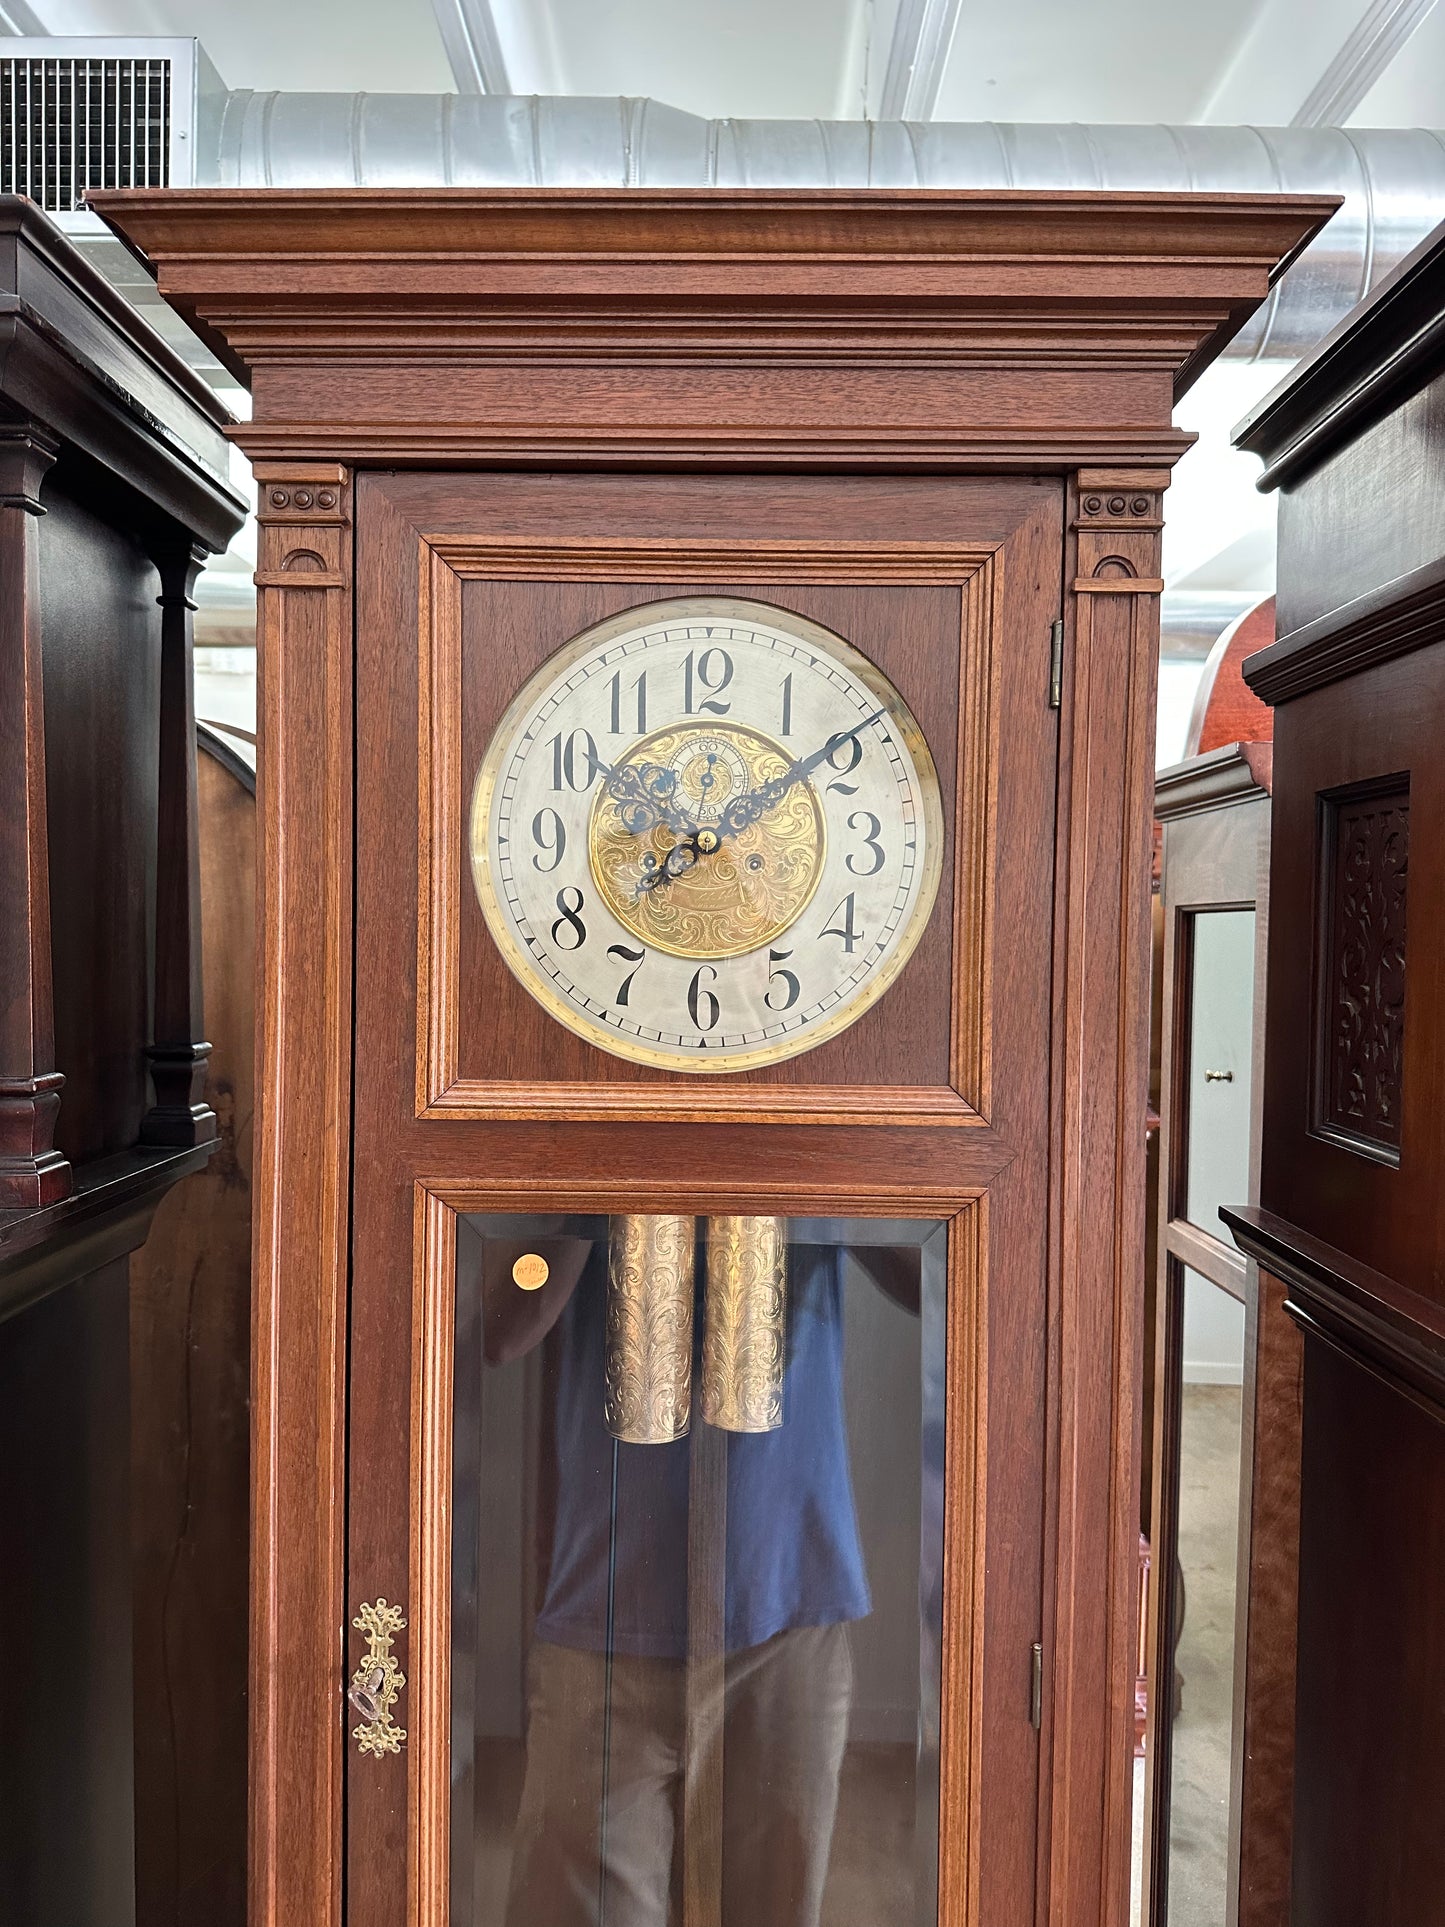 Antique - 2 Weight Vienna Regulator Grandfather Clock